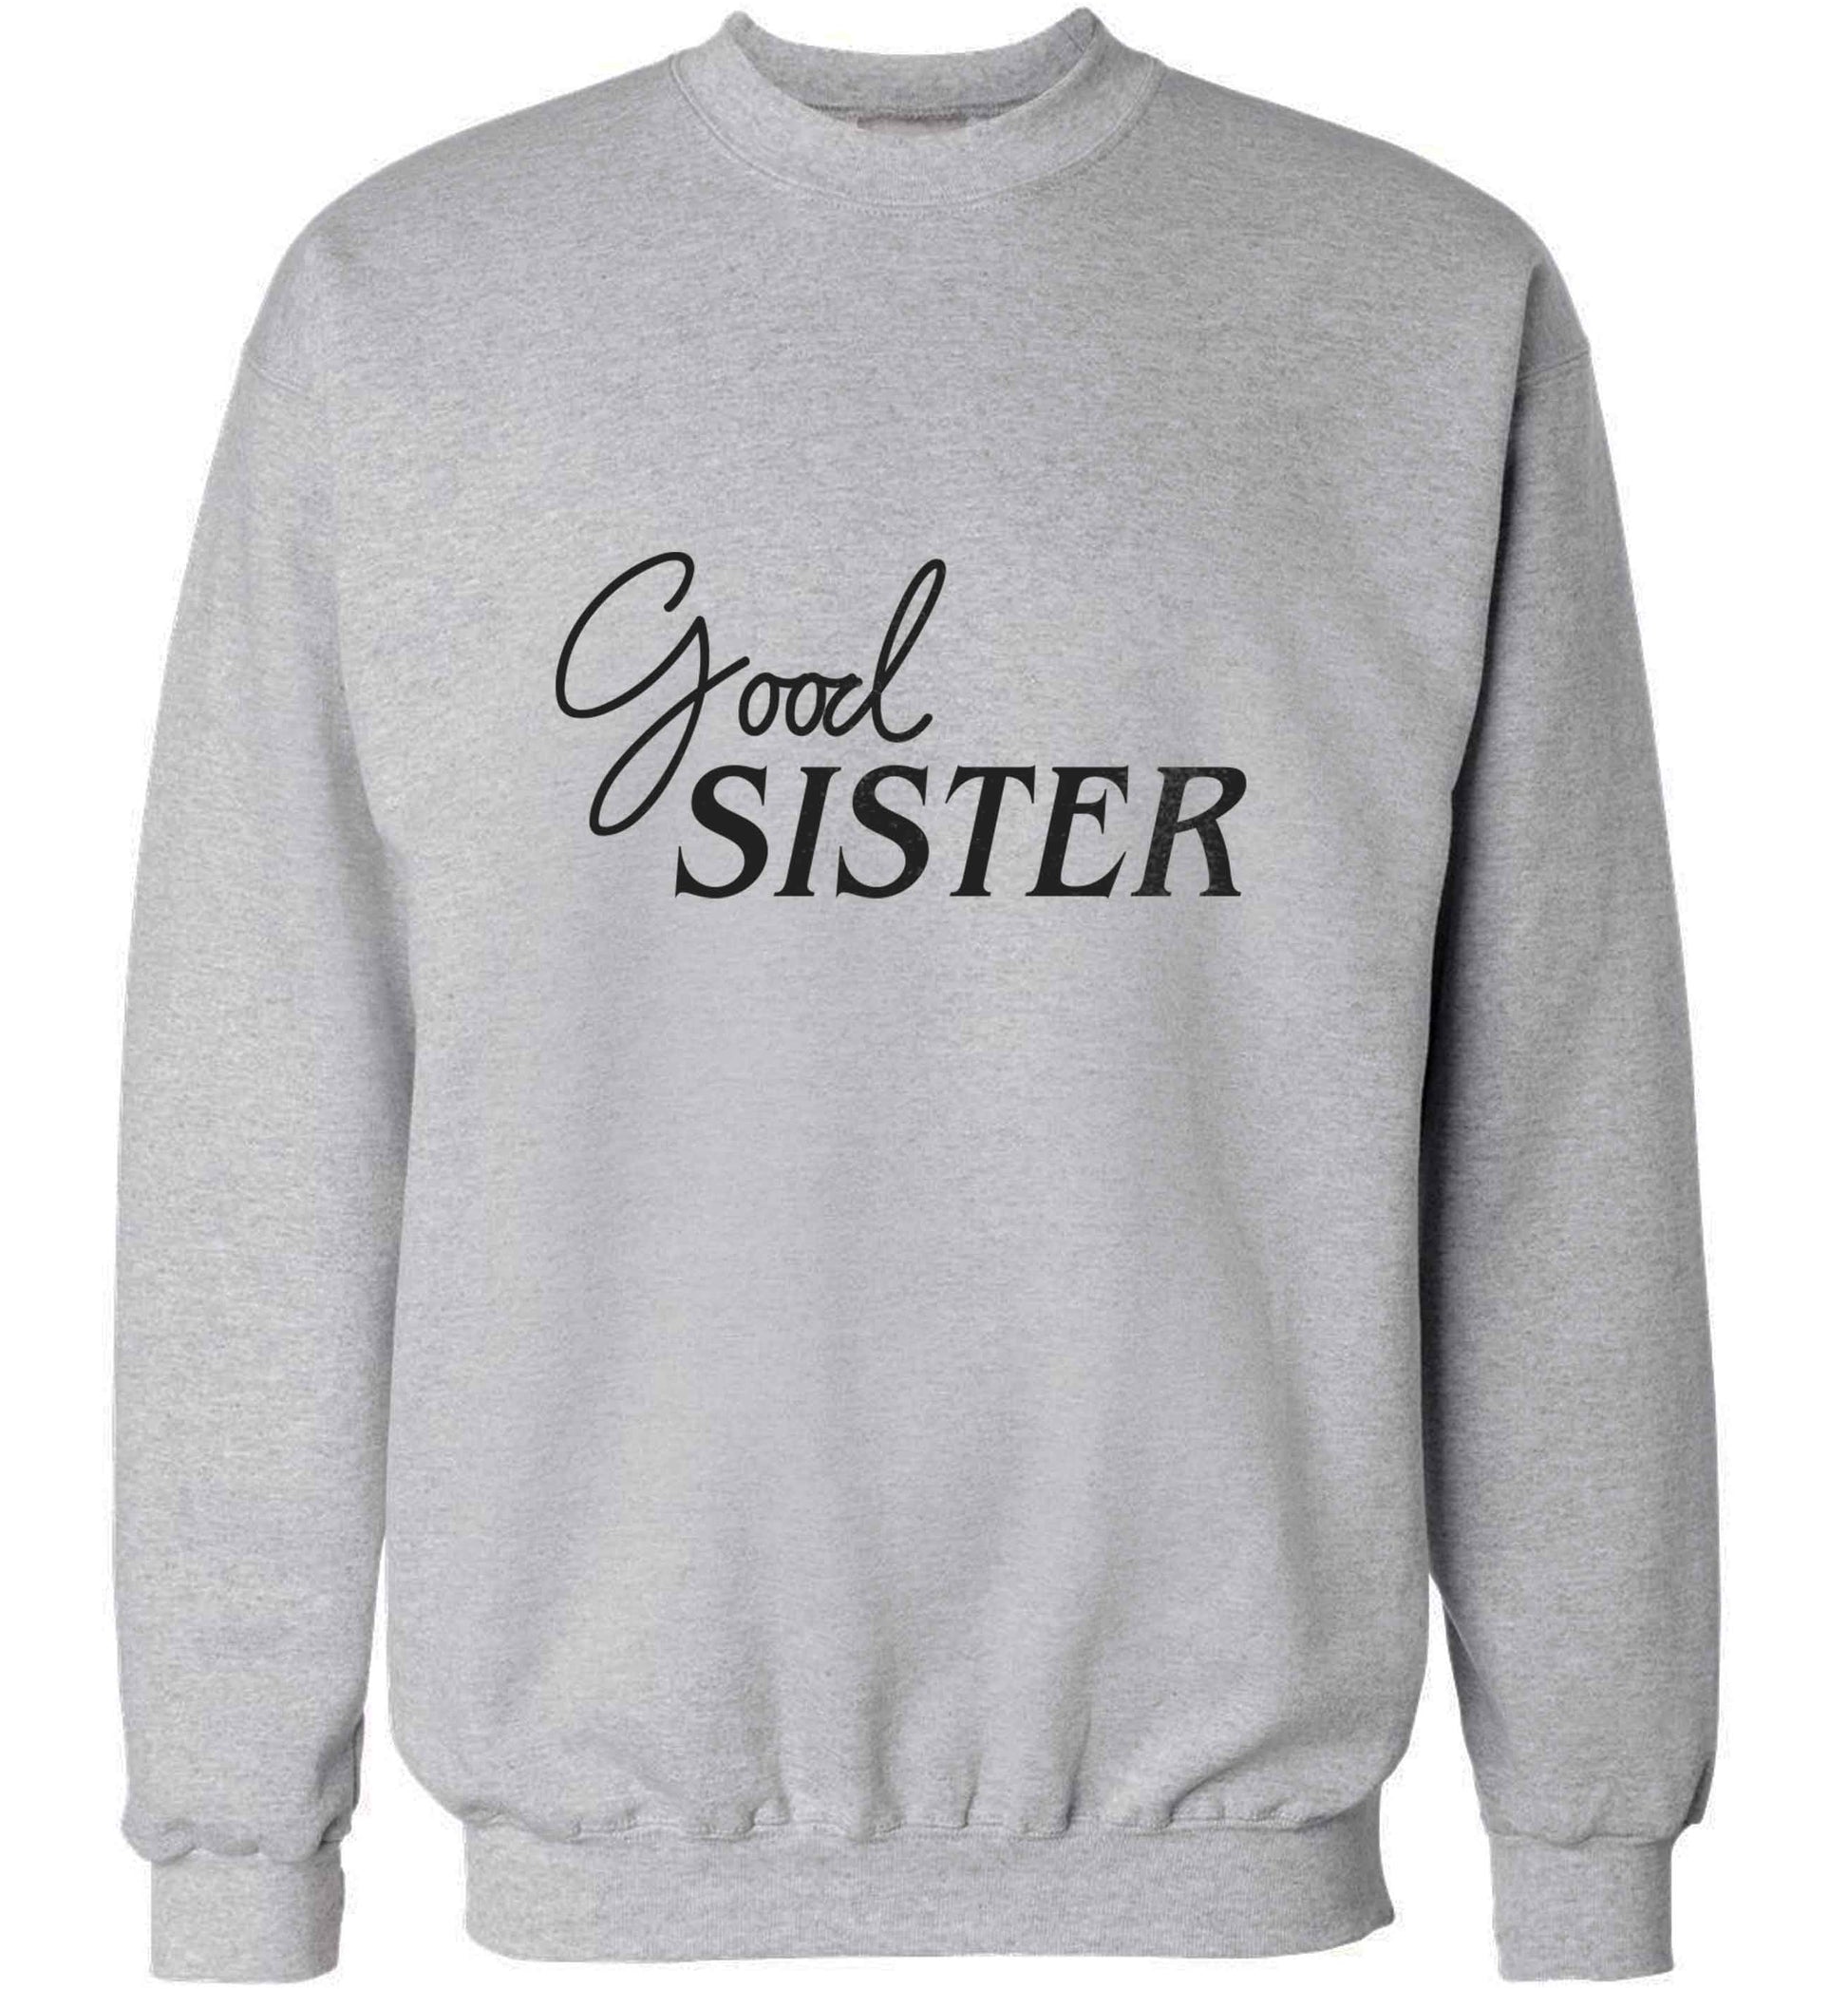 Good sister adult's unisex grey sweater 2XL